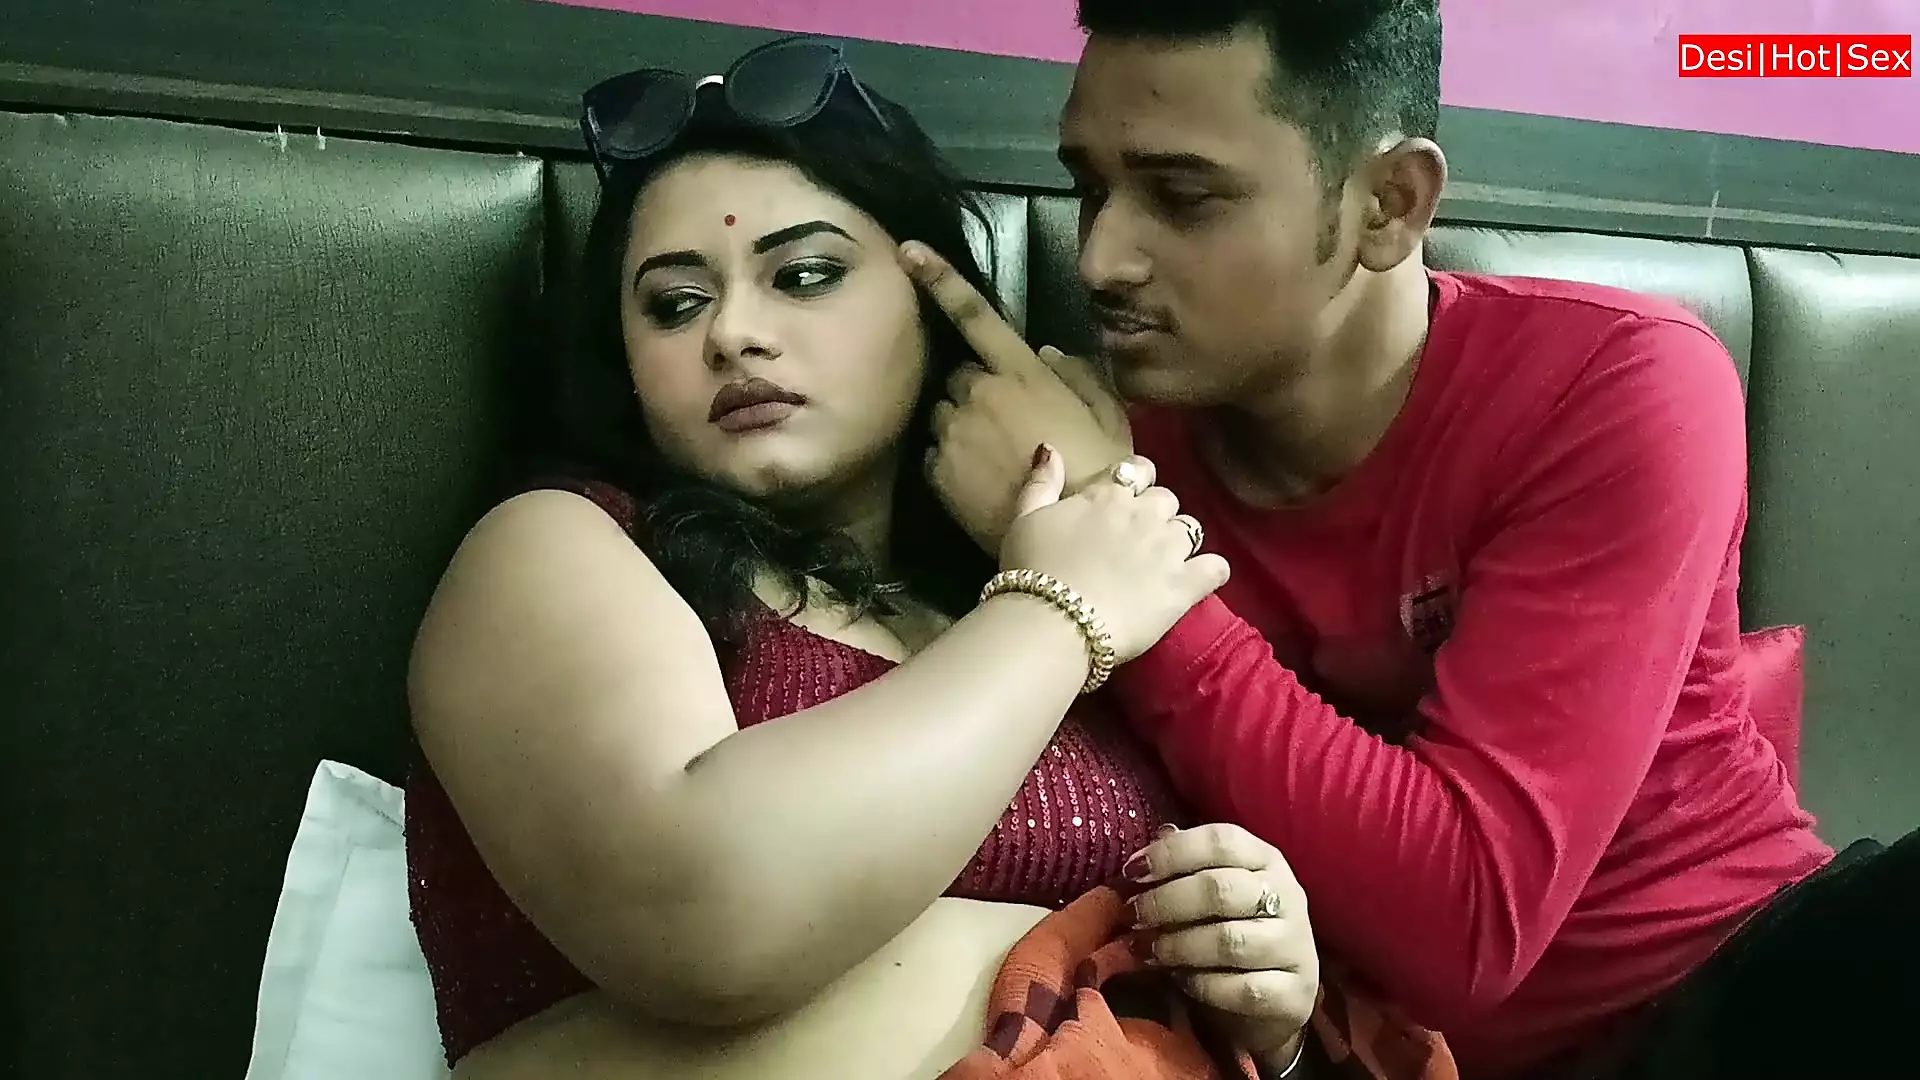 Desi Pure Hot Bhabhi Fucking with Neighbour Boy! Hindi Web photo picture